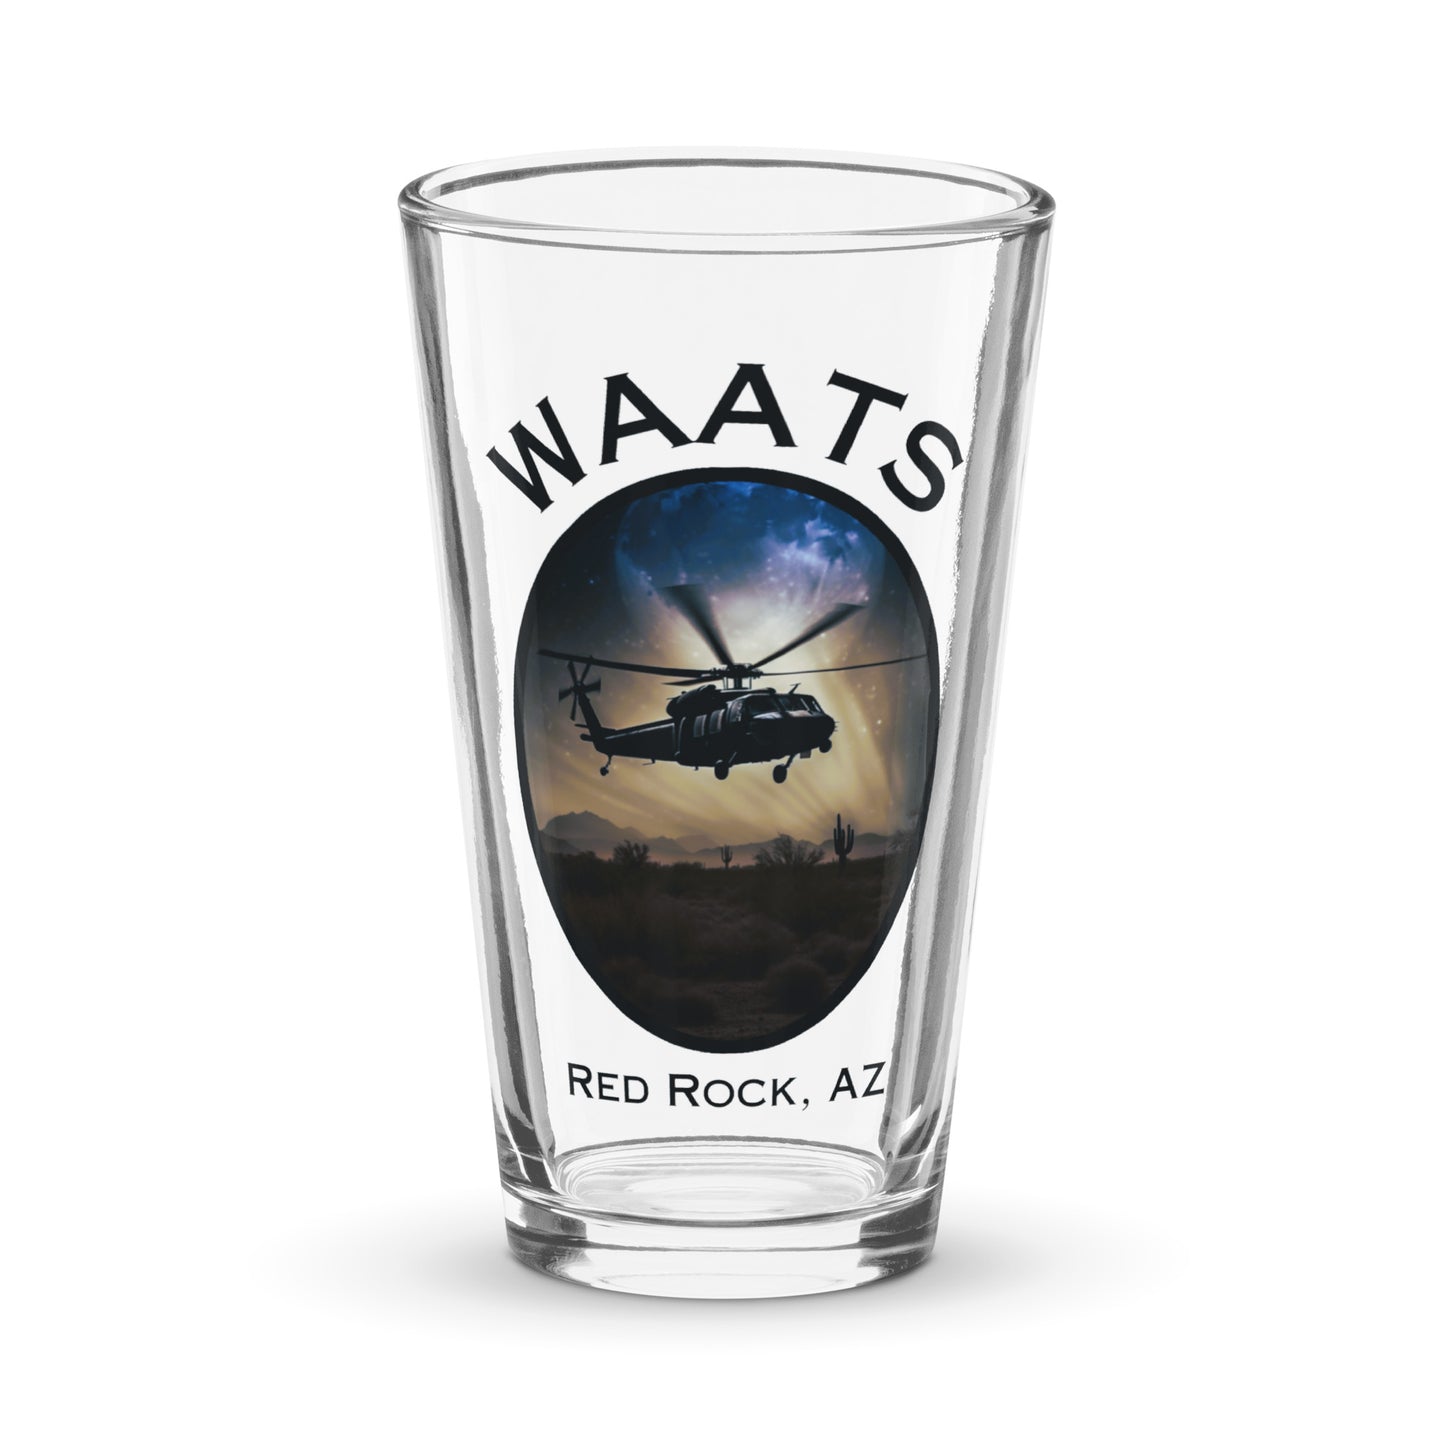 WAATS Night Flight Shaker Pint Glass